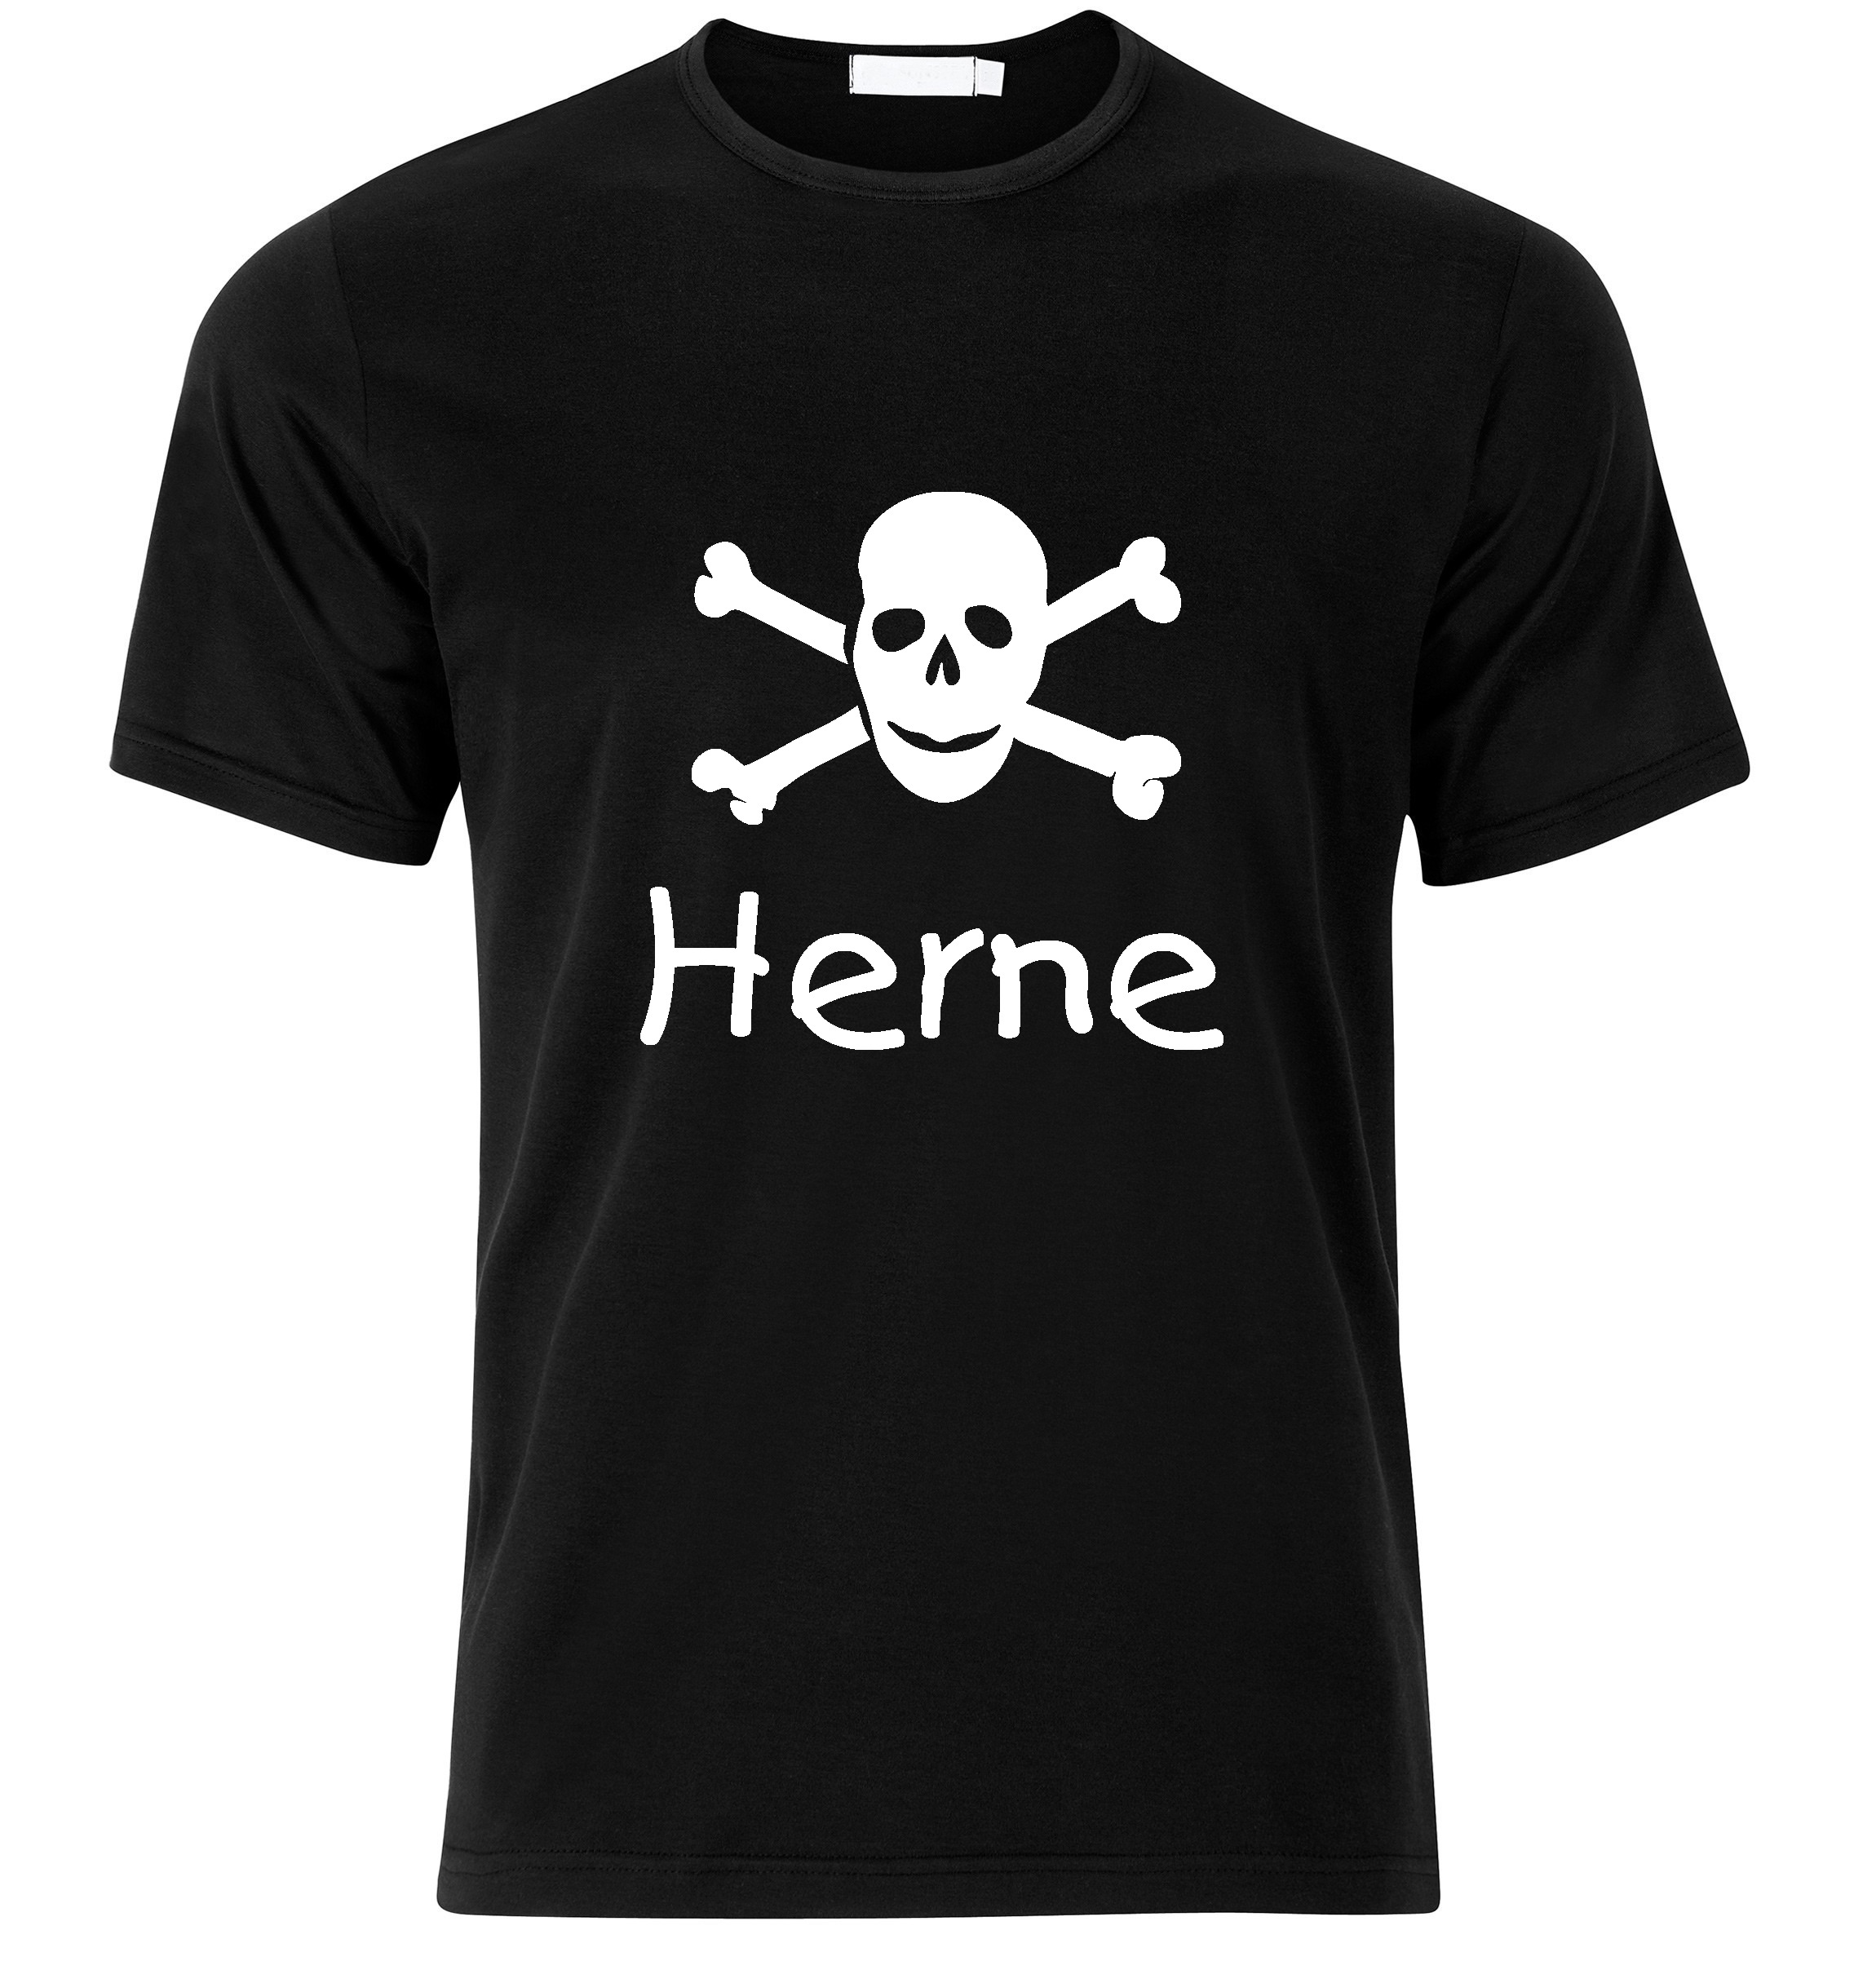 T-Shirt Herne Jolly Roger, Totenkopf